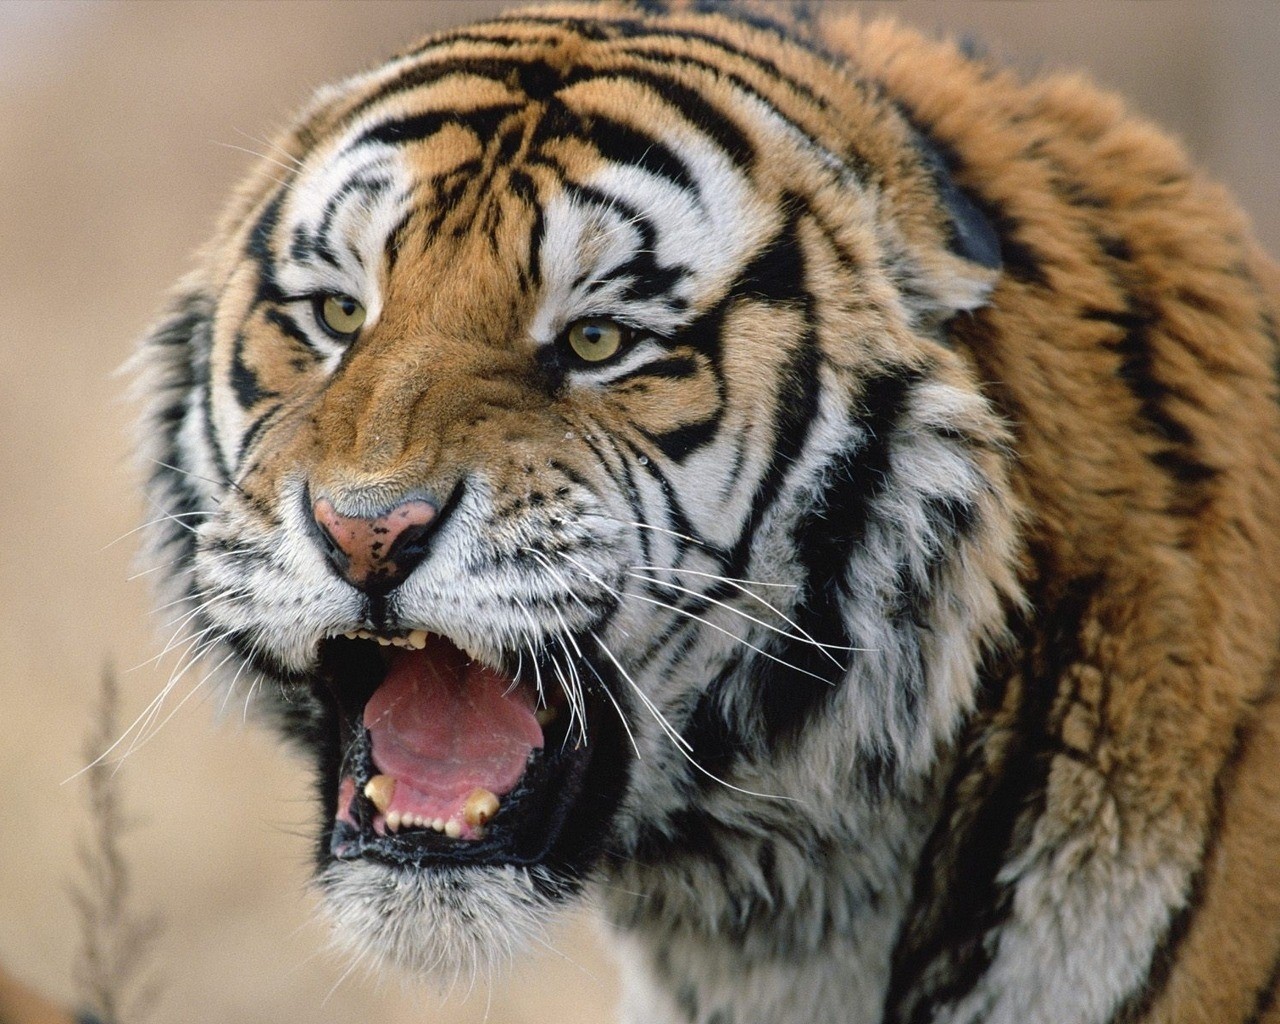 Angry Tiger - Angry Tiger Image Download - HD Wallpaper 